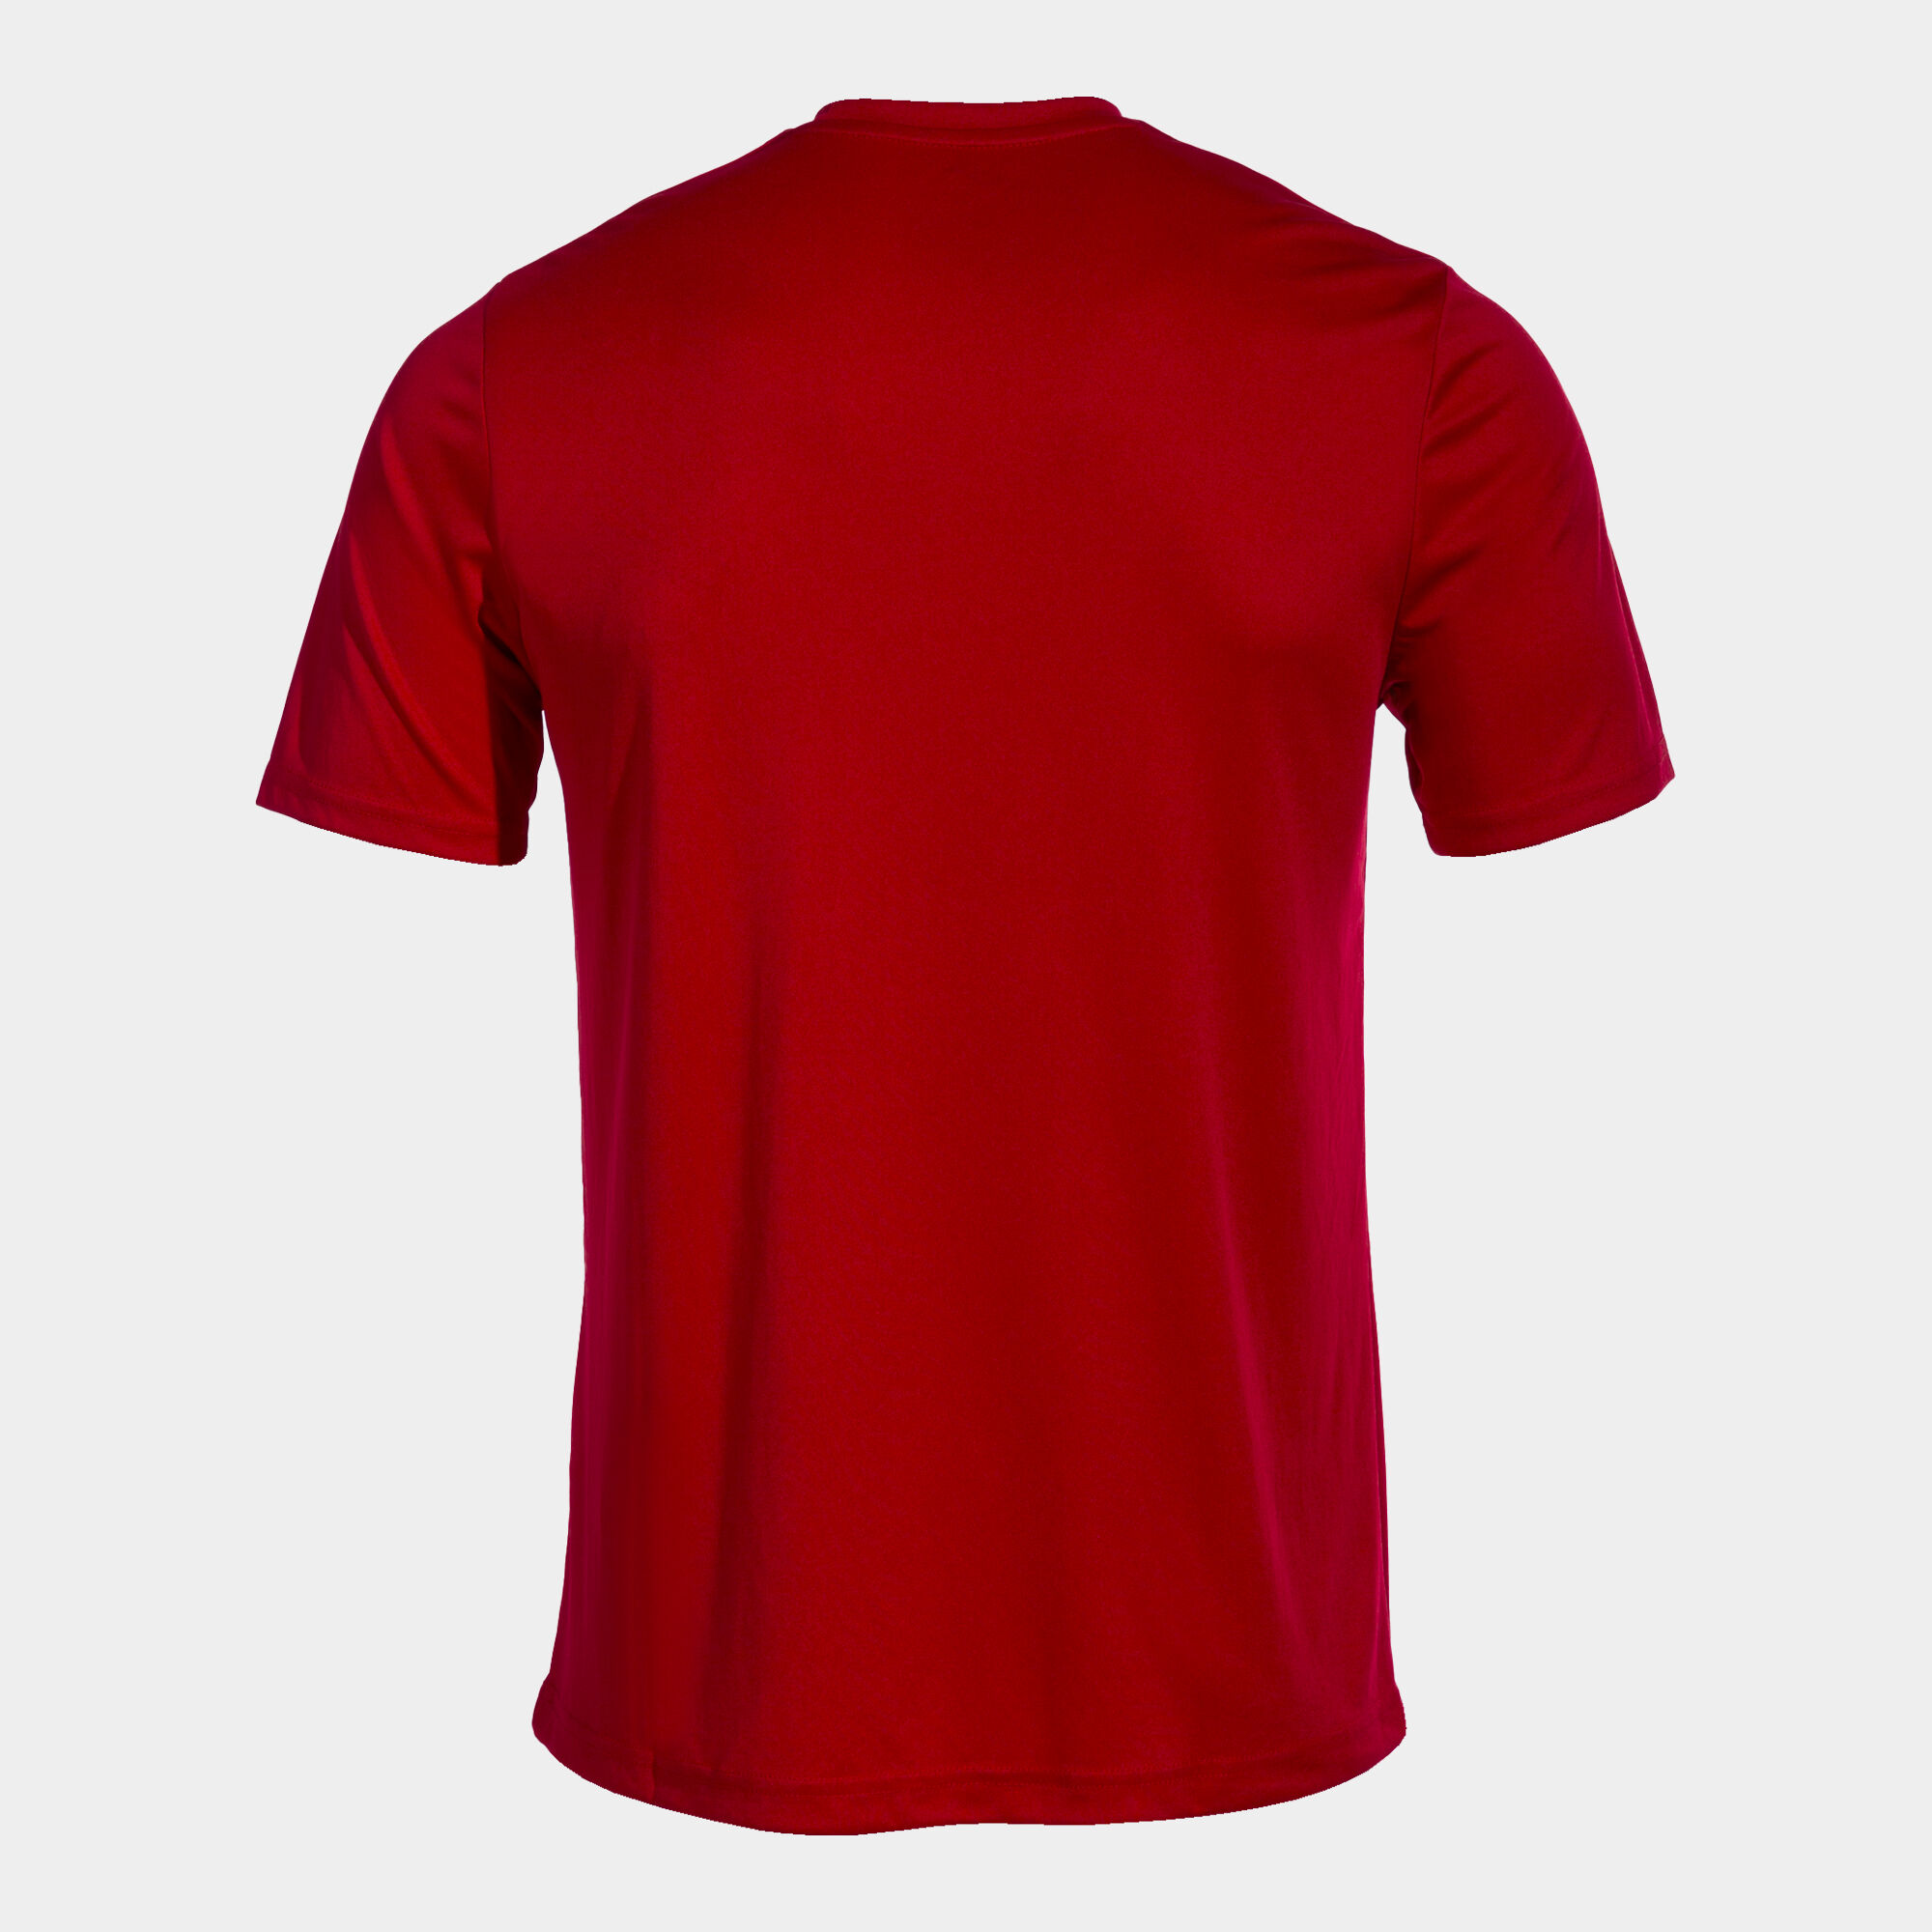 Camiseta manga corta hombre Combi rojo